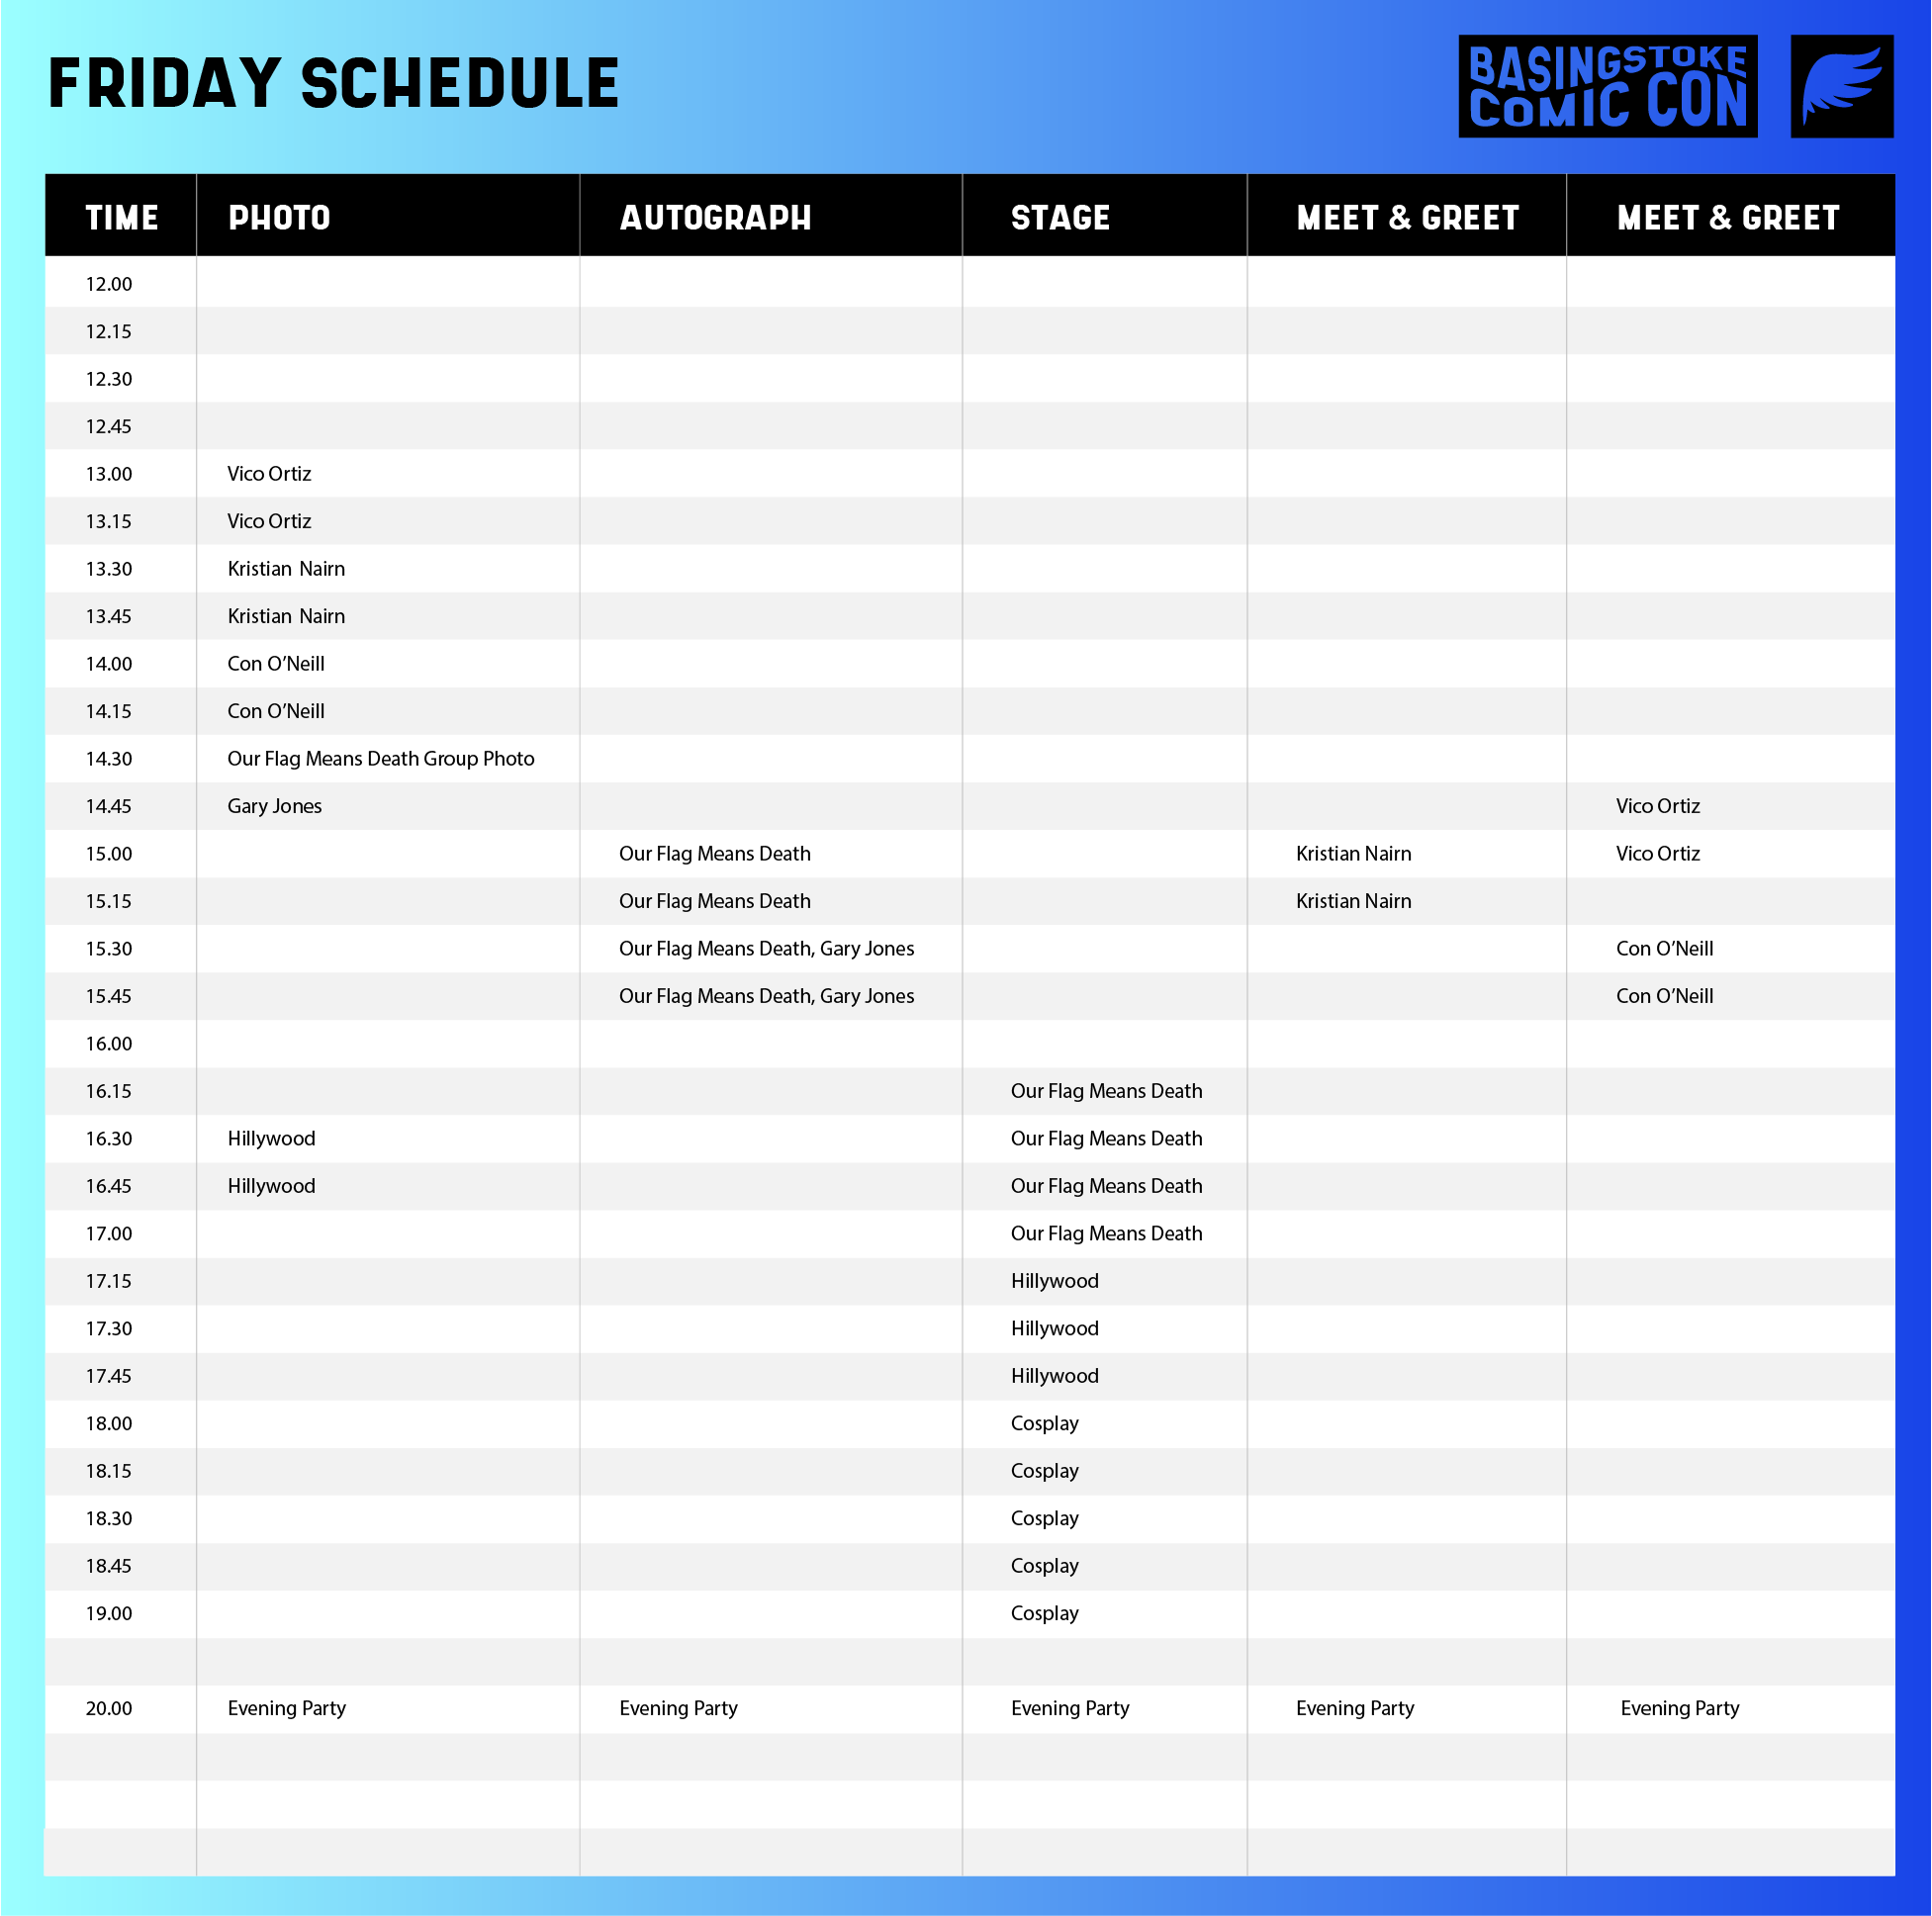 Basingstoke Comic Con schedule -Friday